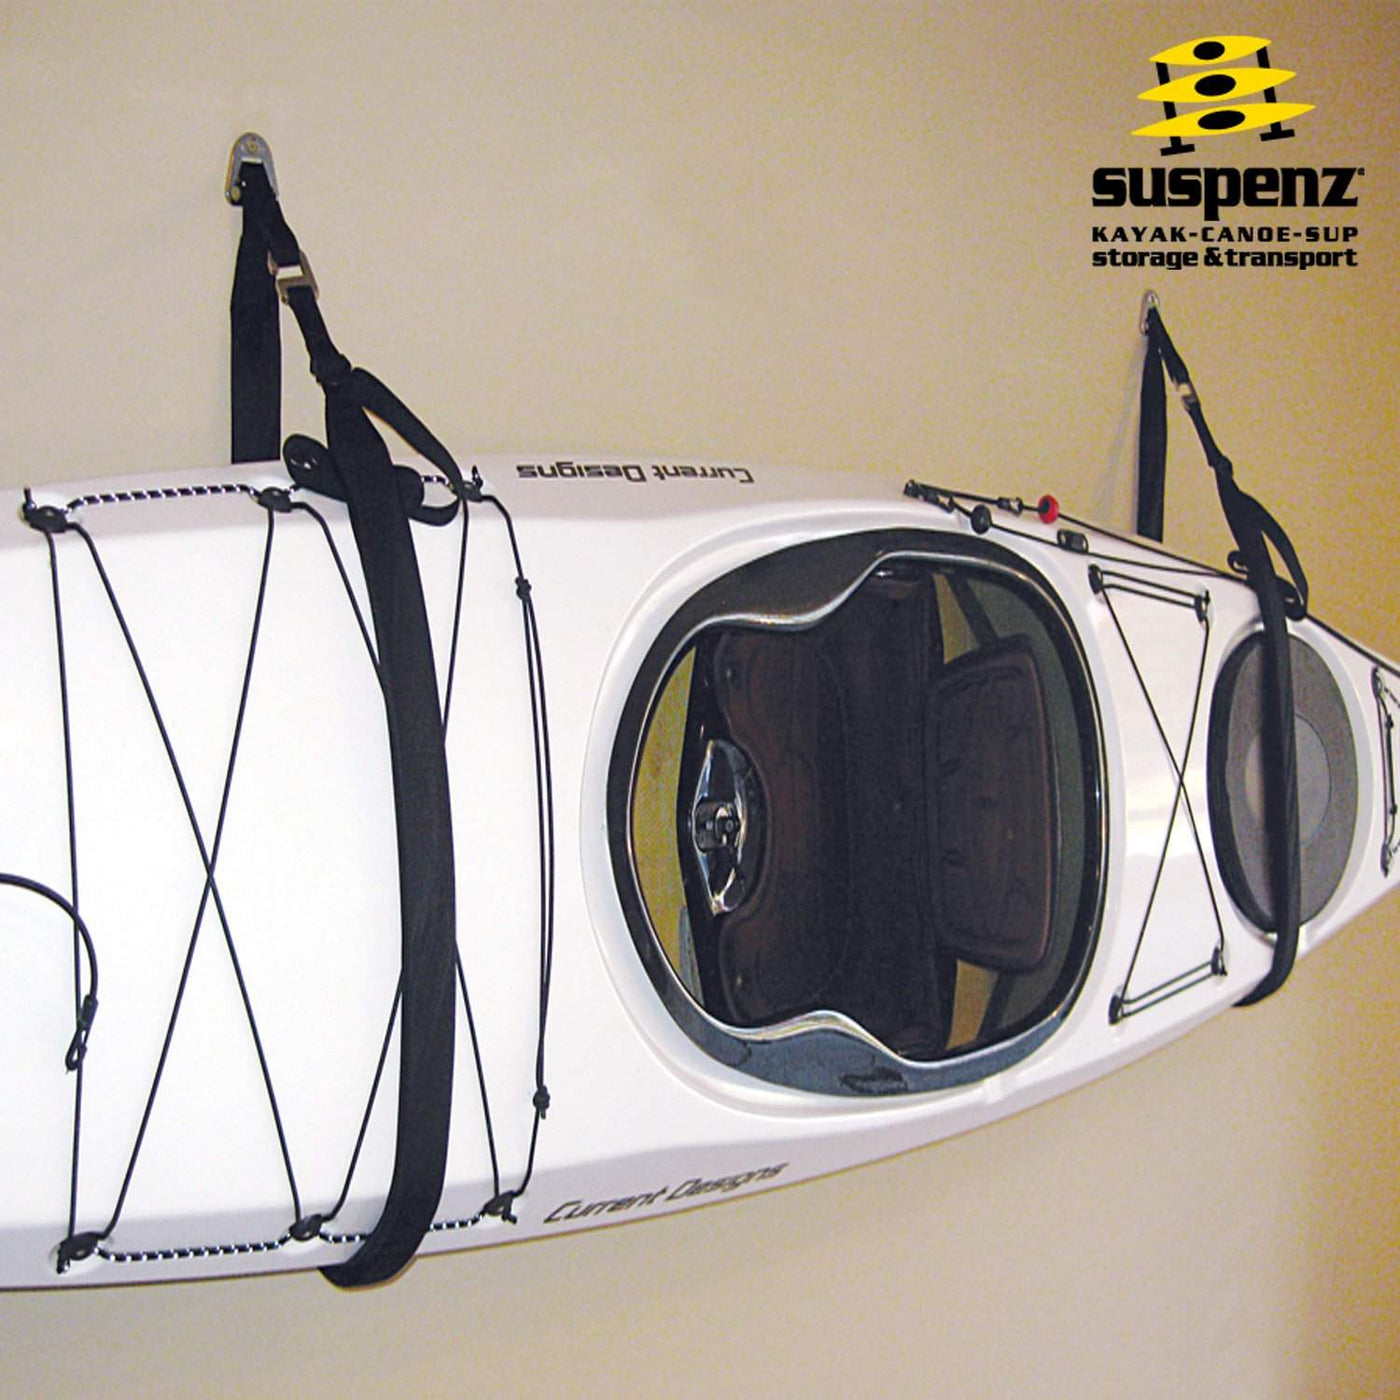 Suspenz Kayak/Canoe DLX Strap Storage System